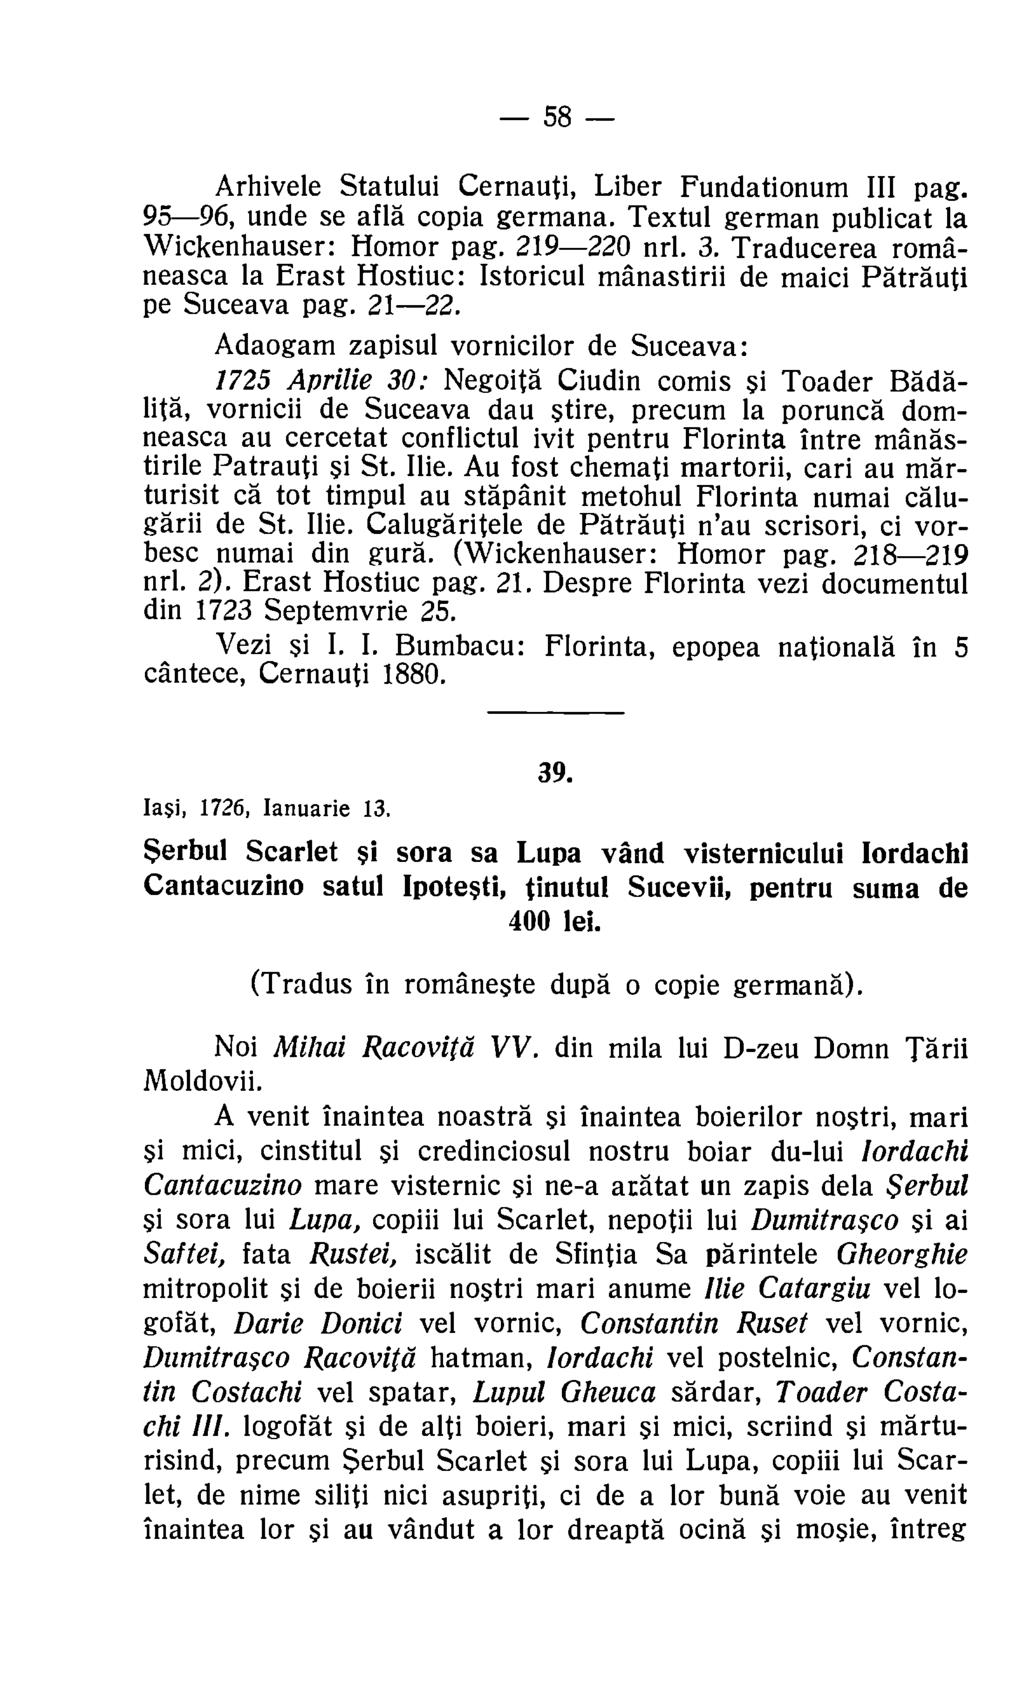 58 Arhivele Statului Cernauti, Liber Fundationum III pag. 95-96, unde se afla copia germana. Textul german publicat la Wickenhauser: Homor pag. 219-220 nrl. 3.